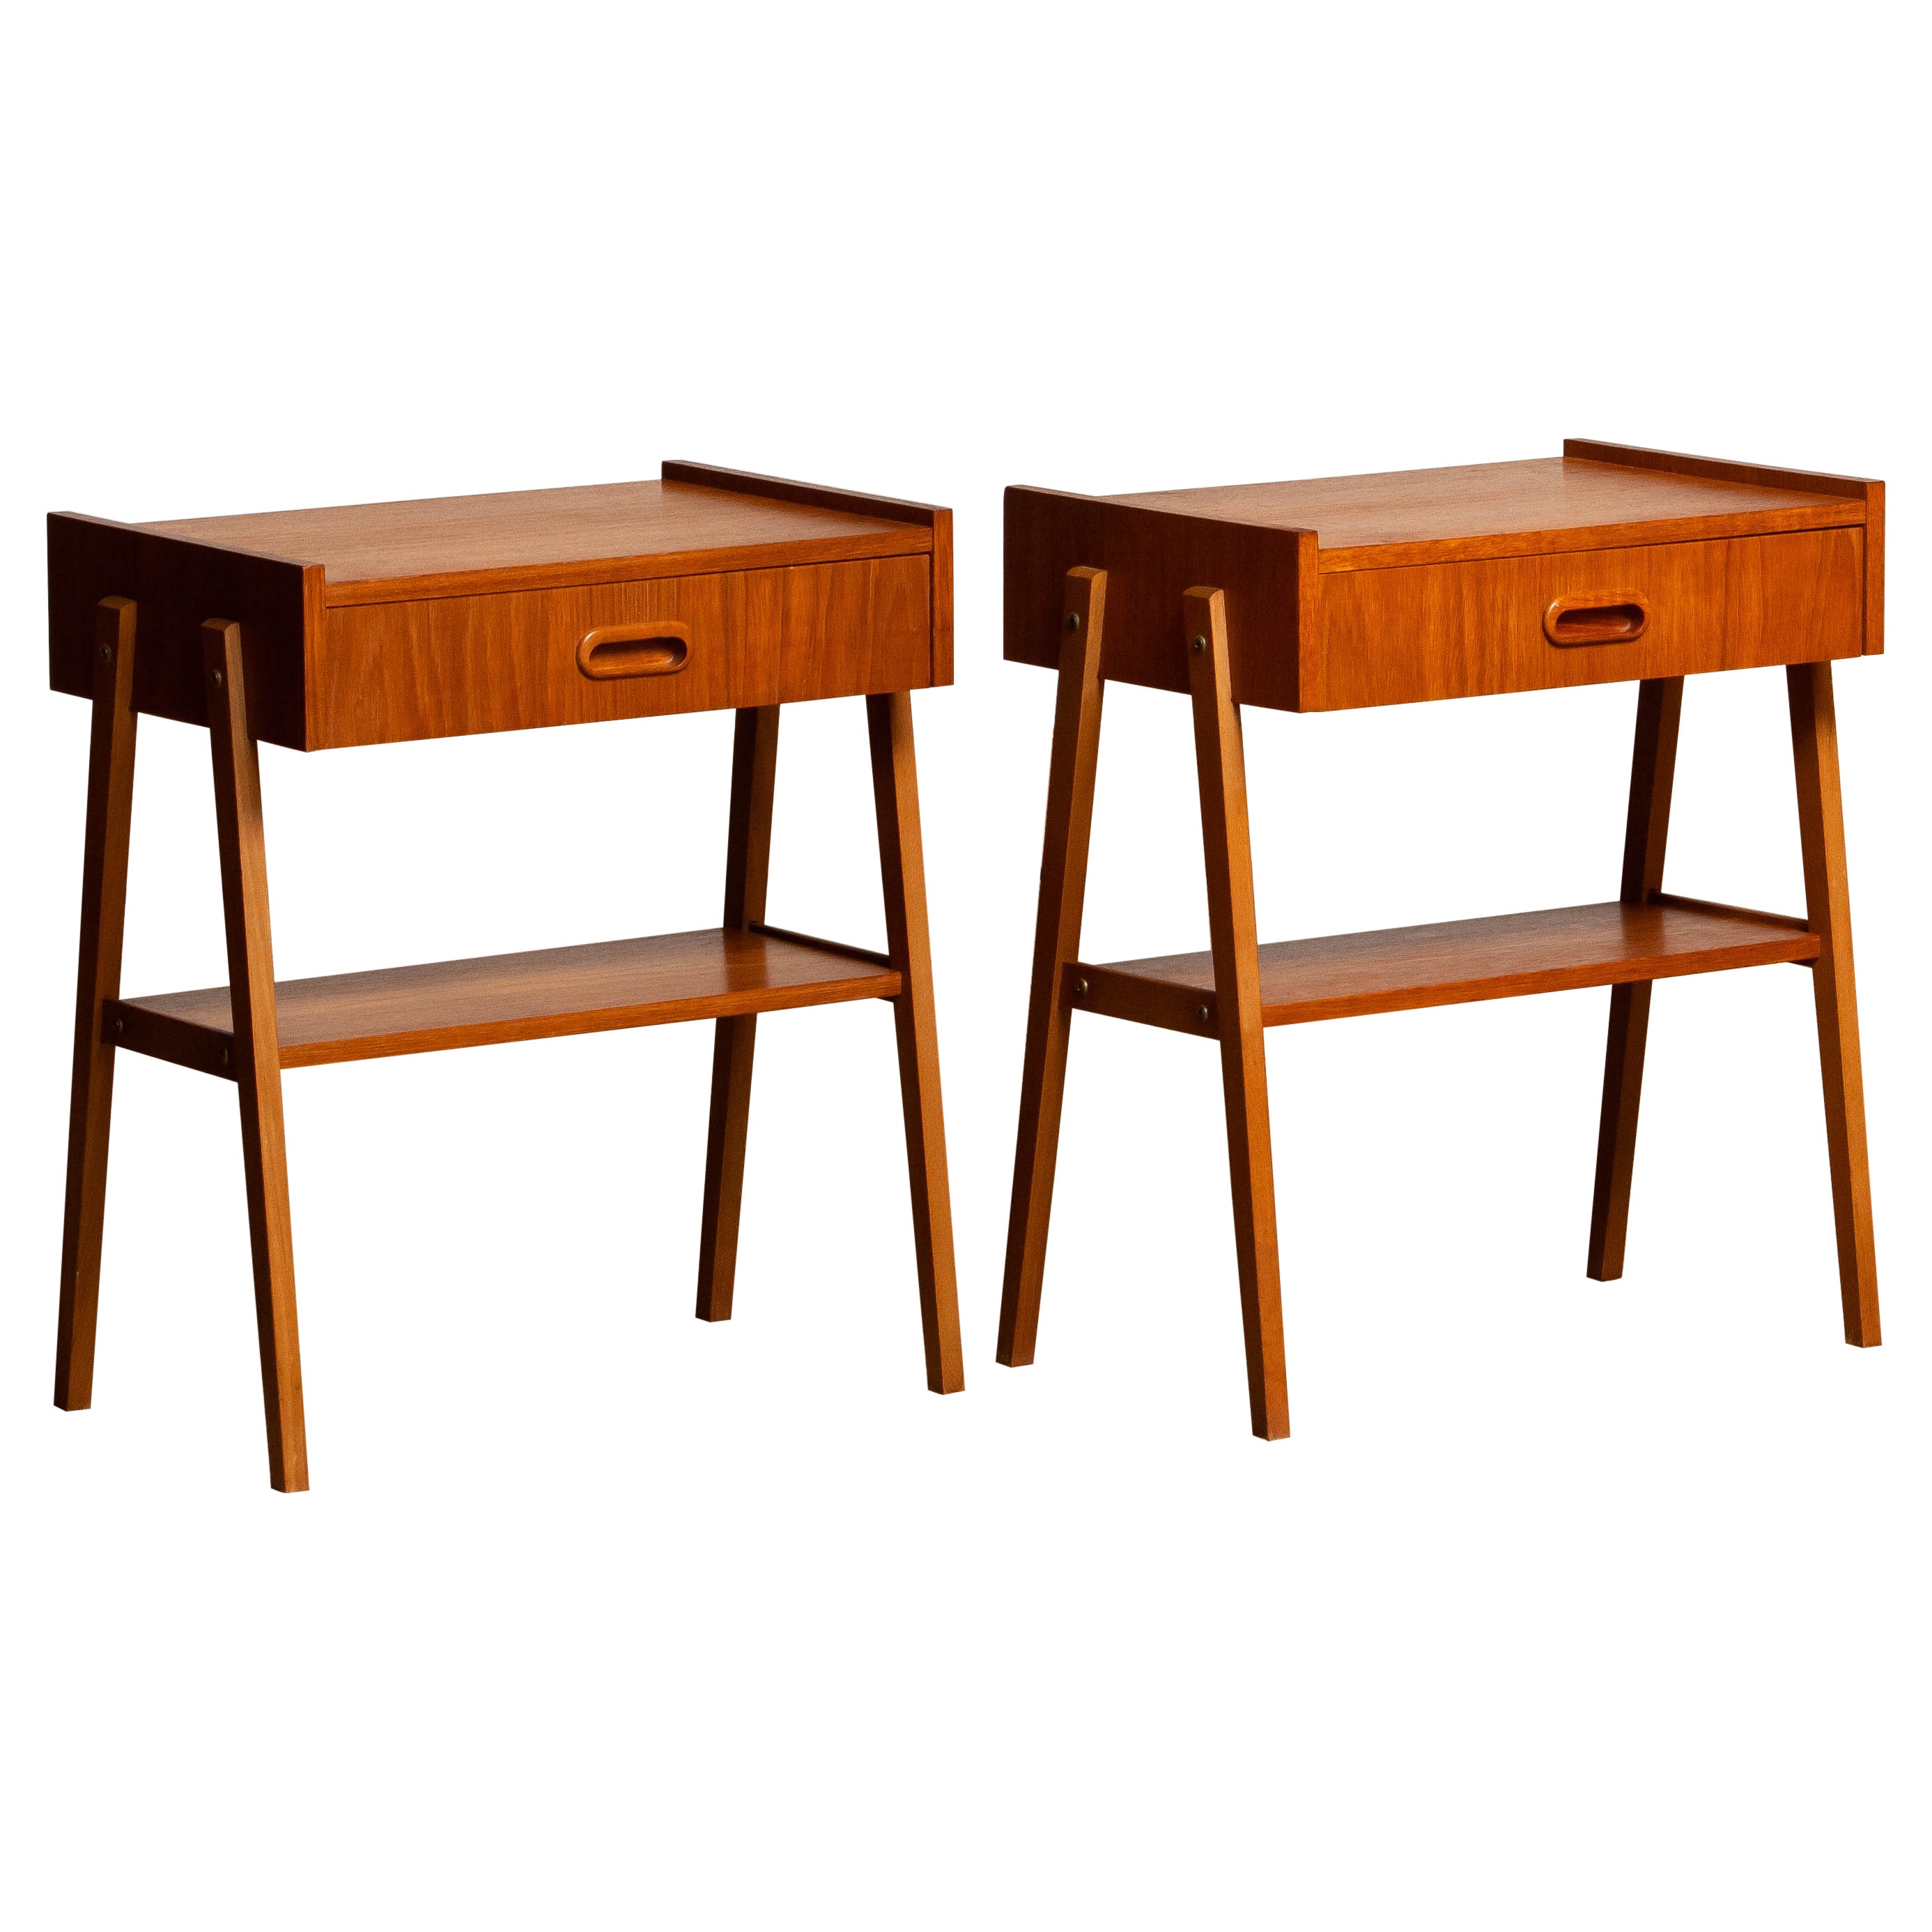 Pair Teak Nightstands / Bedside Tables by Ulferts Möbler from Sweden in 1950's